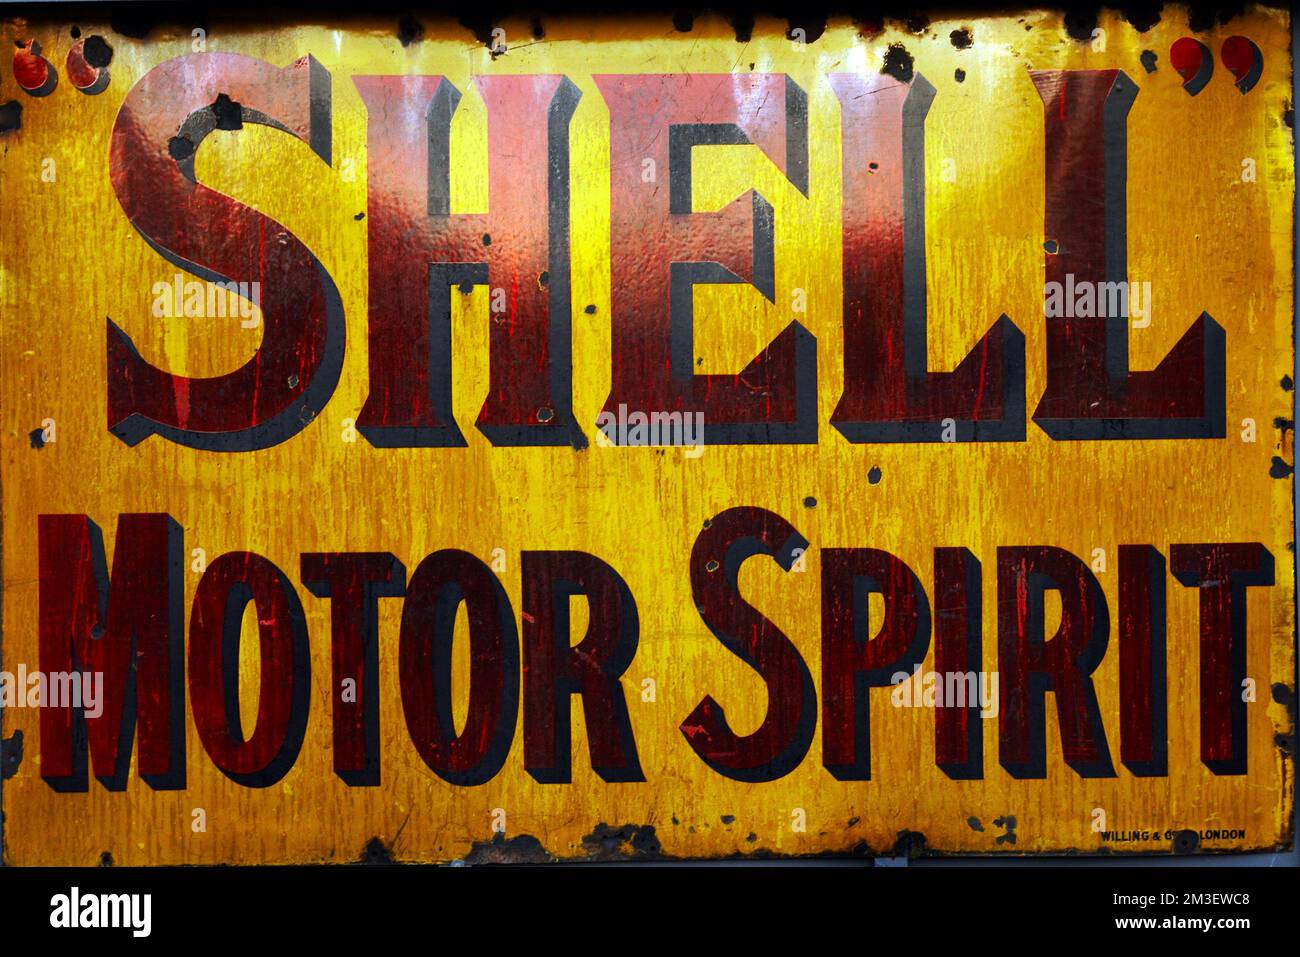 Shell Motor Spirit vieux panneau vintage , Angleterre. Banque D'Images